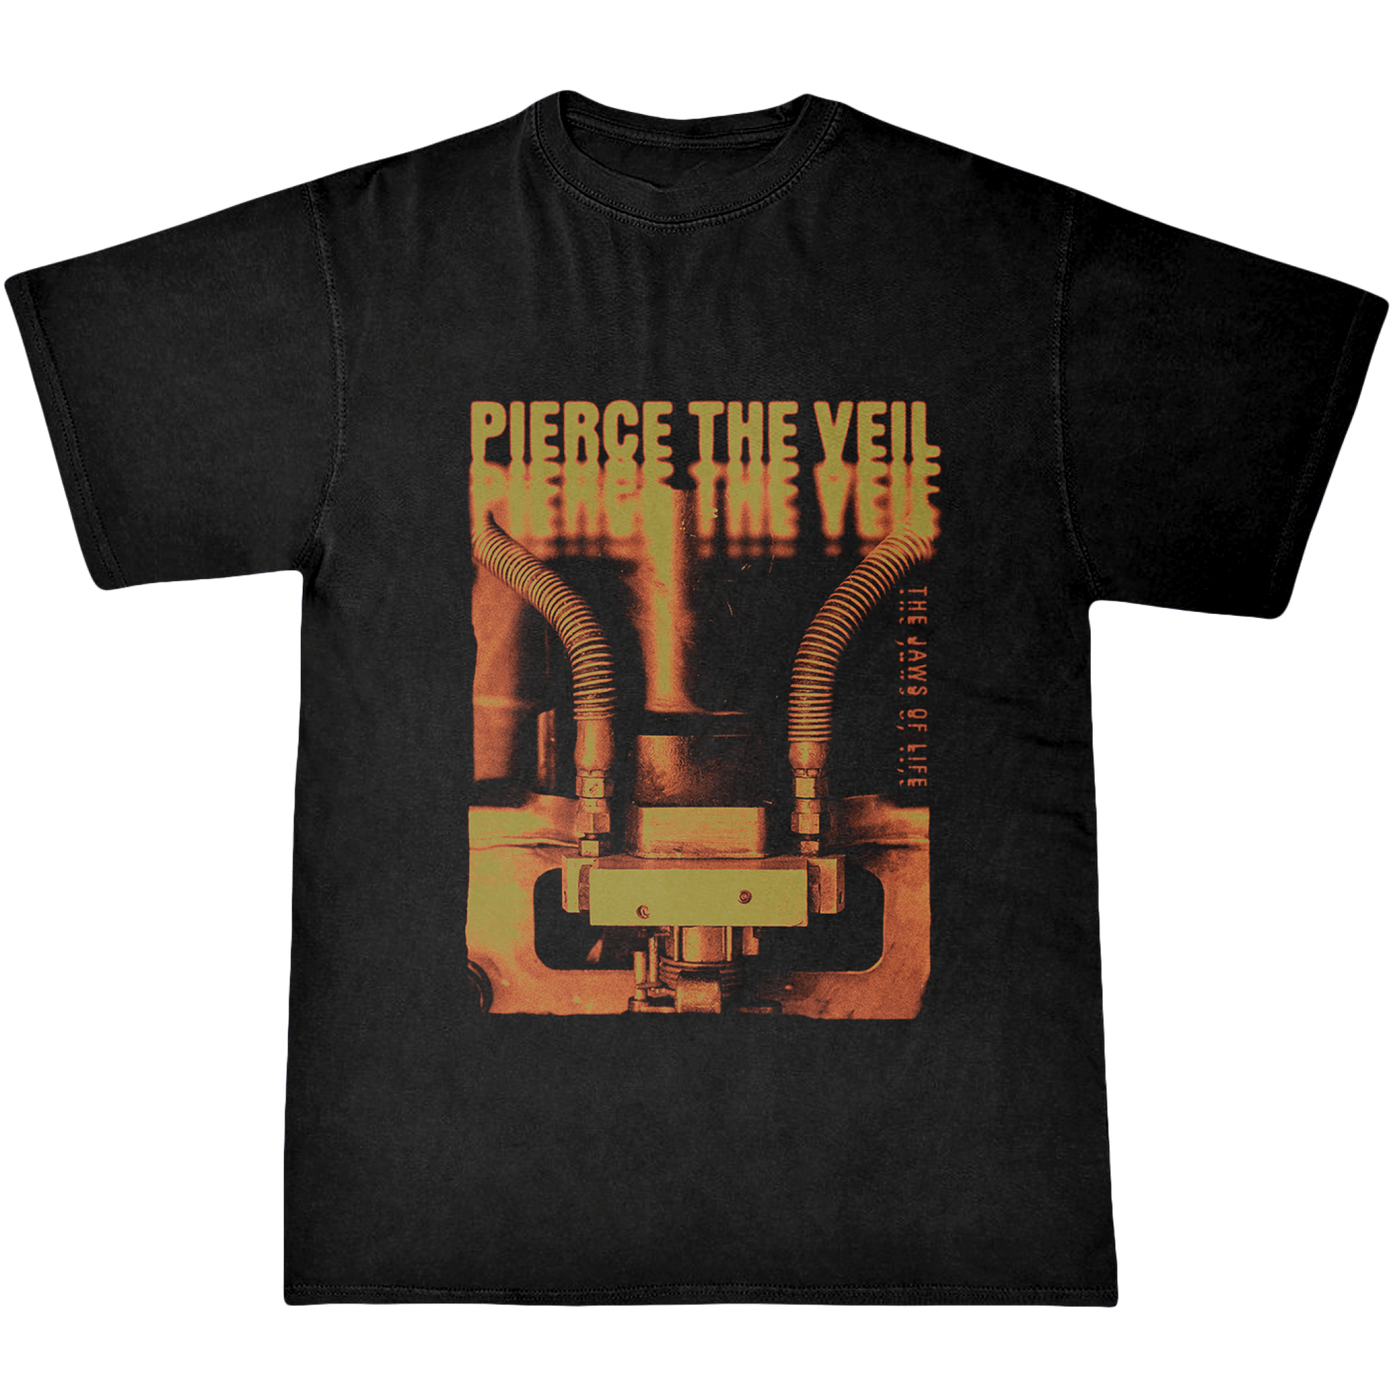 Pierce The Veil "Hydraulic" T-Shirt